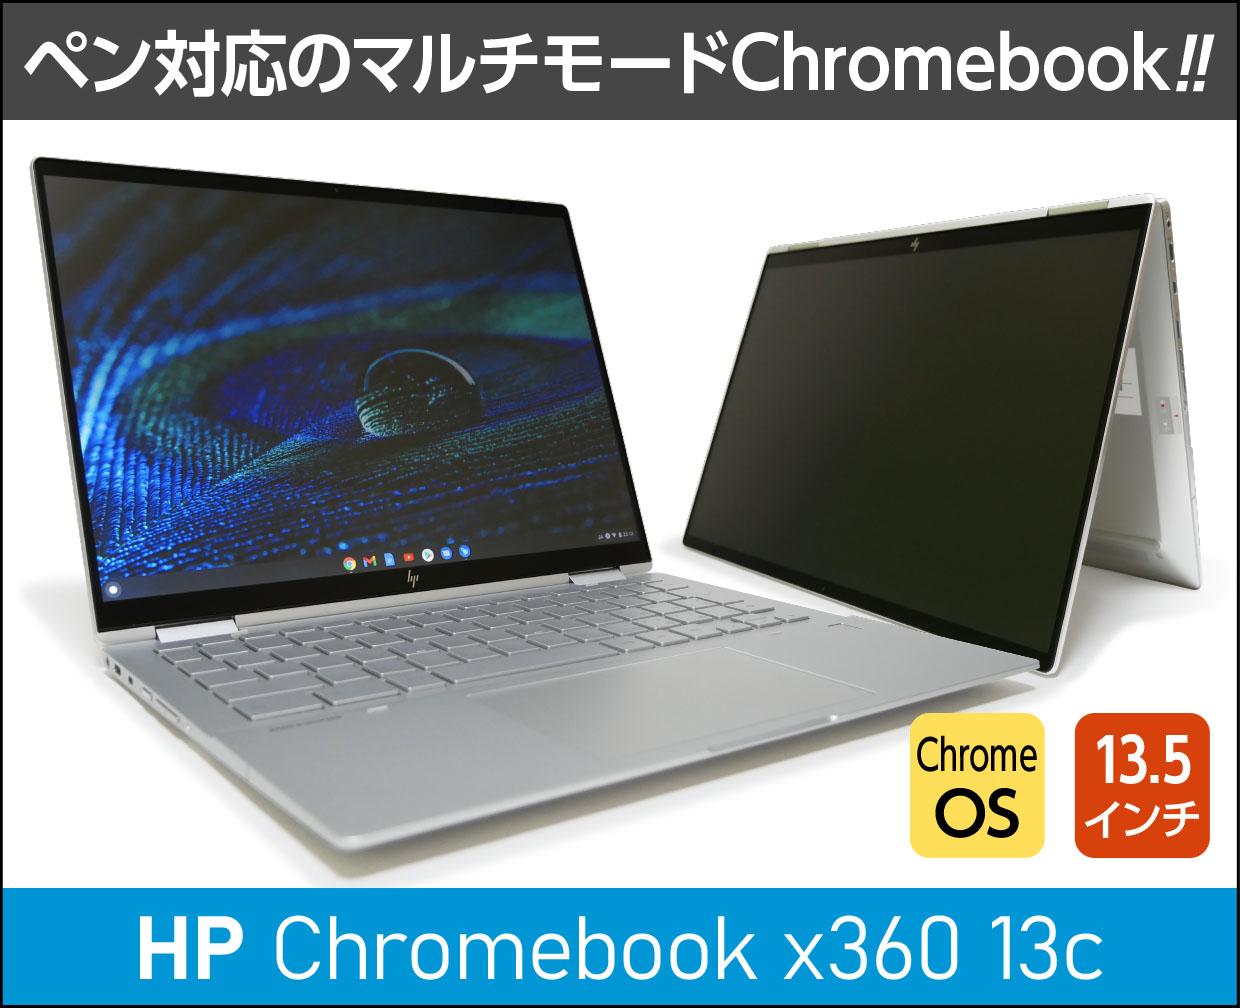 Chromebook X360 13c